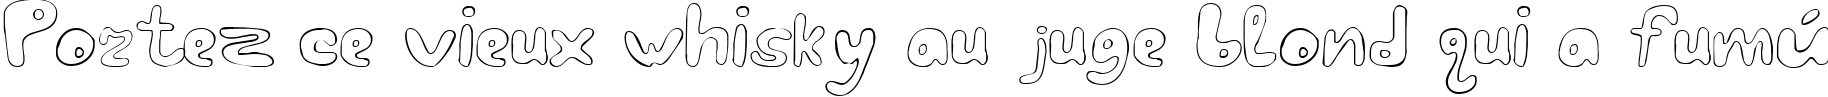 Пример написания шрифтом LC Blowzy текста на французском